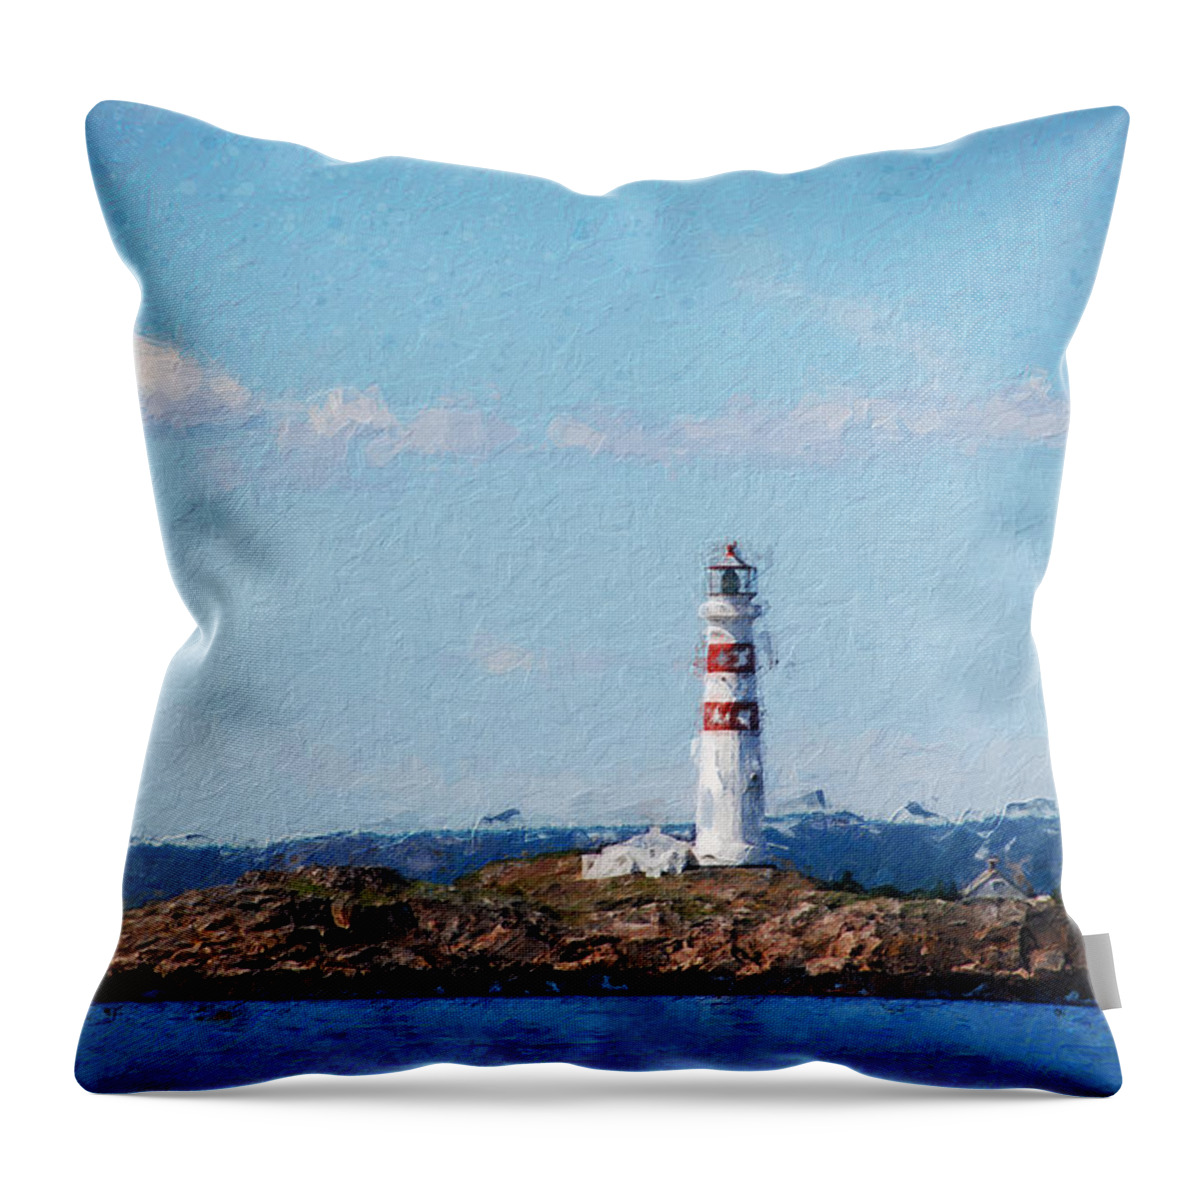 Lighthouse Throw Pillow featuring the digital art Oksoy Lighthouse by Geir Rosset